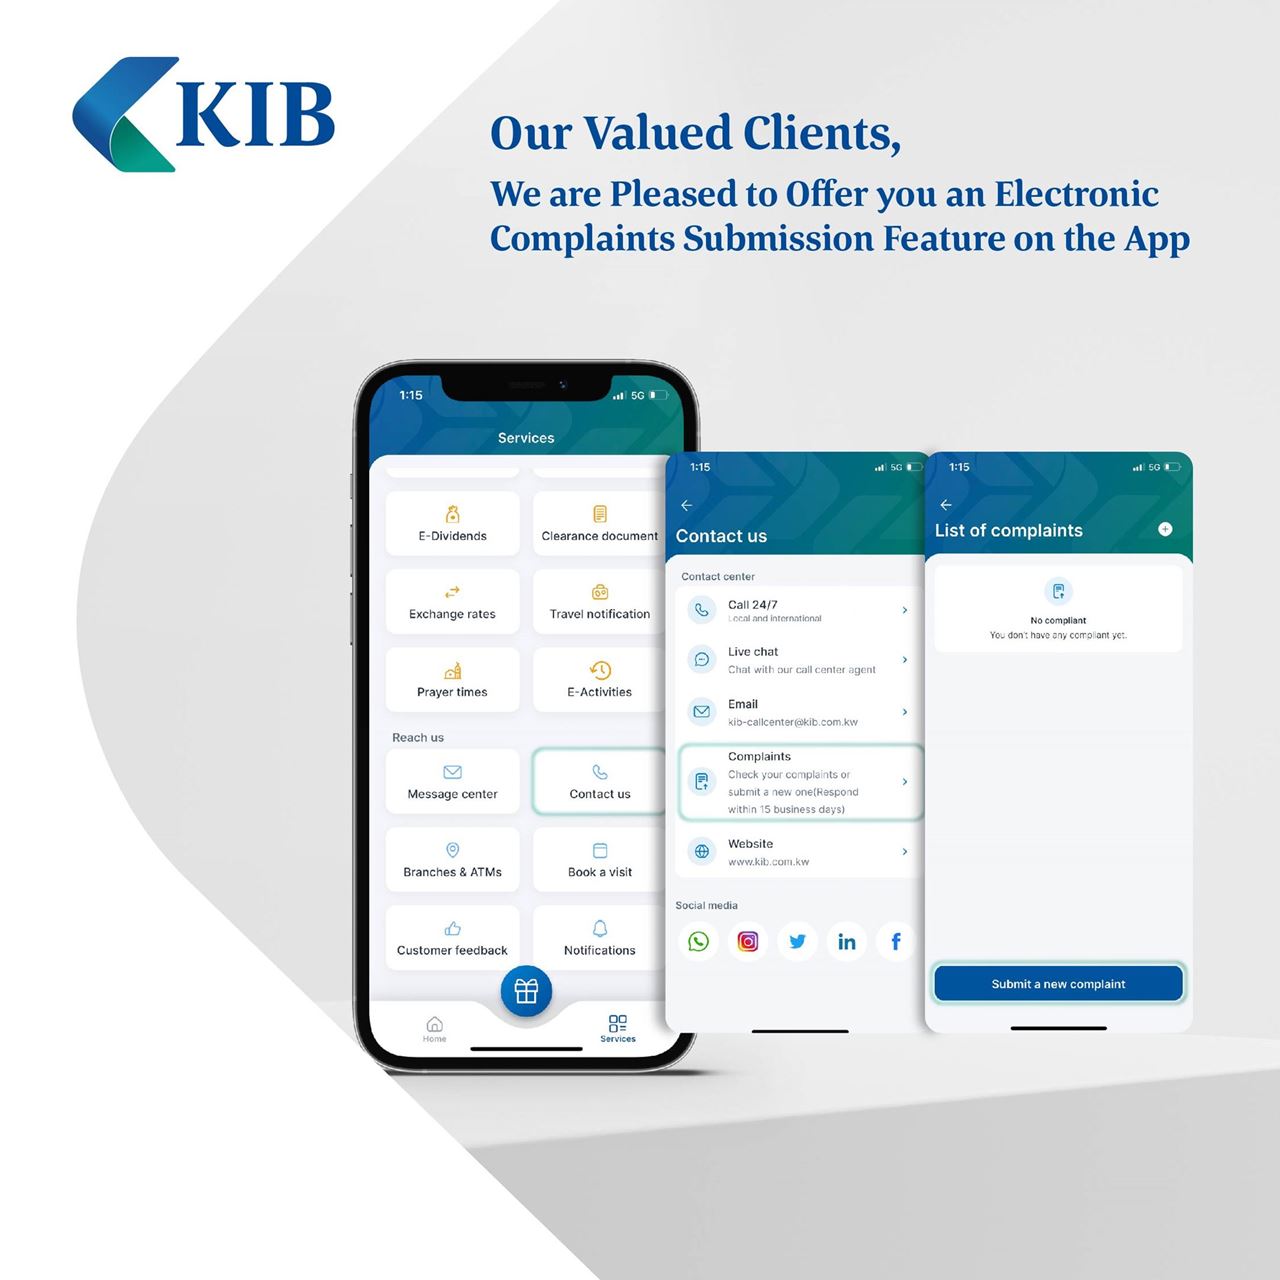 KIB provides complaints service on its new mobile application